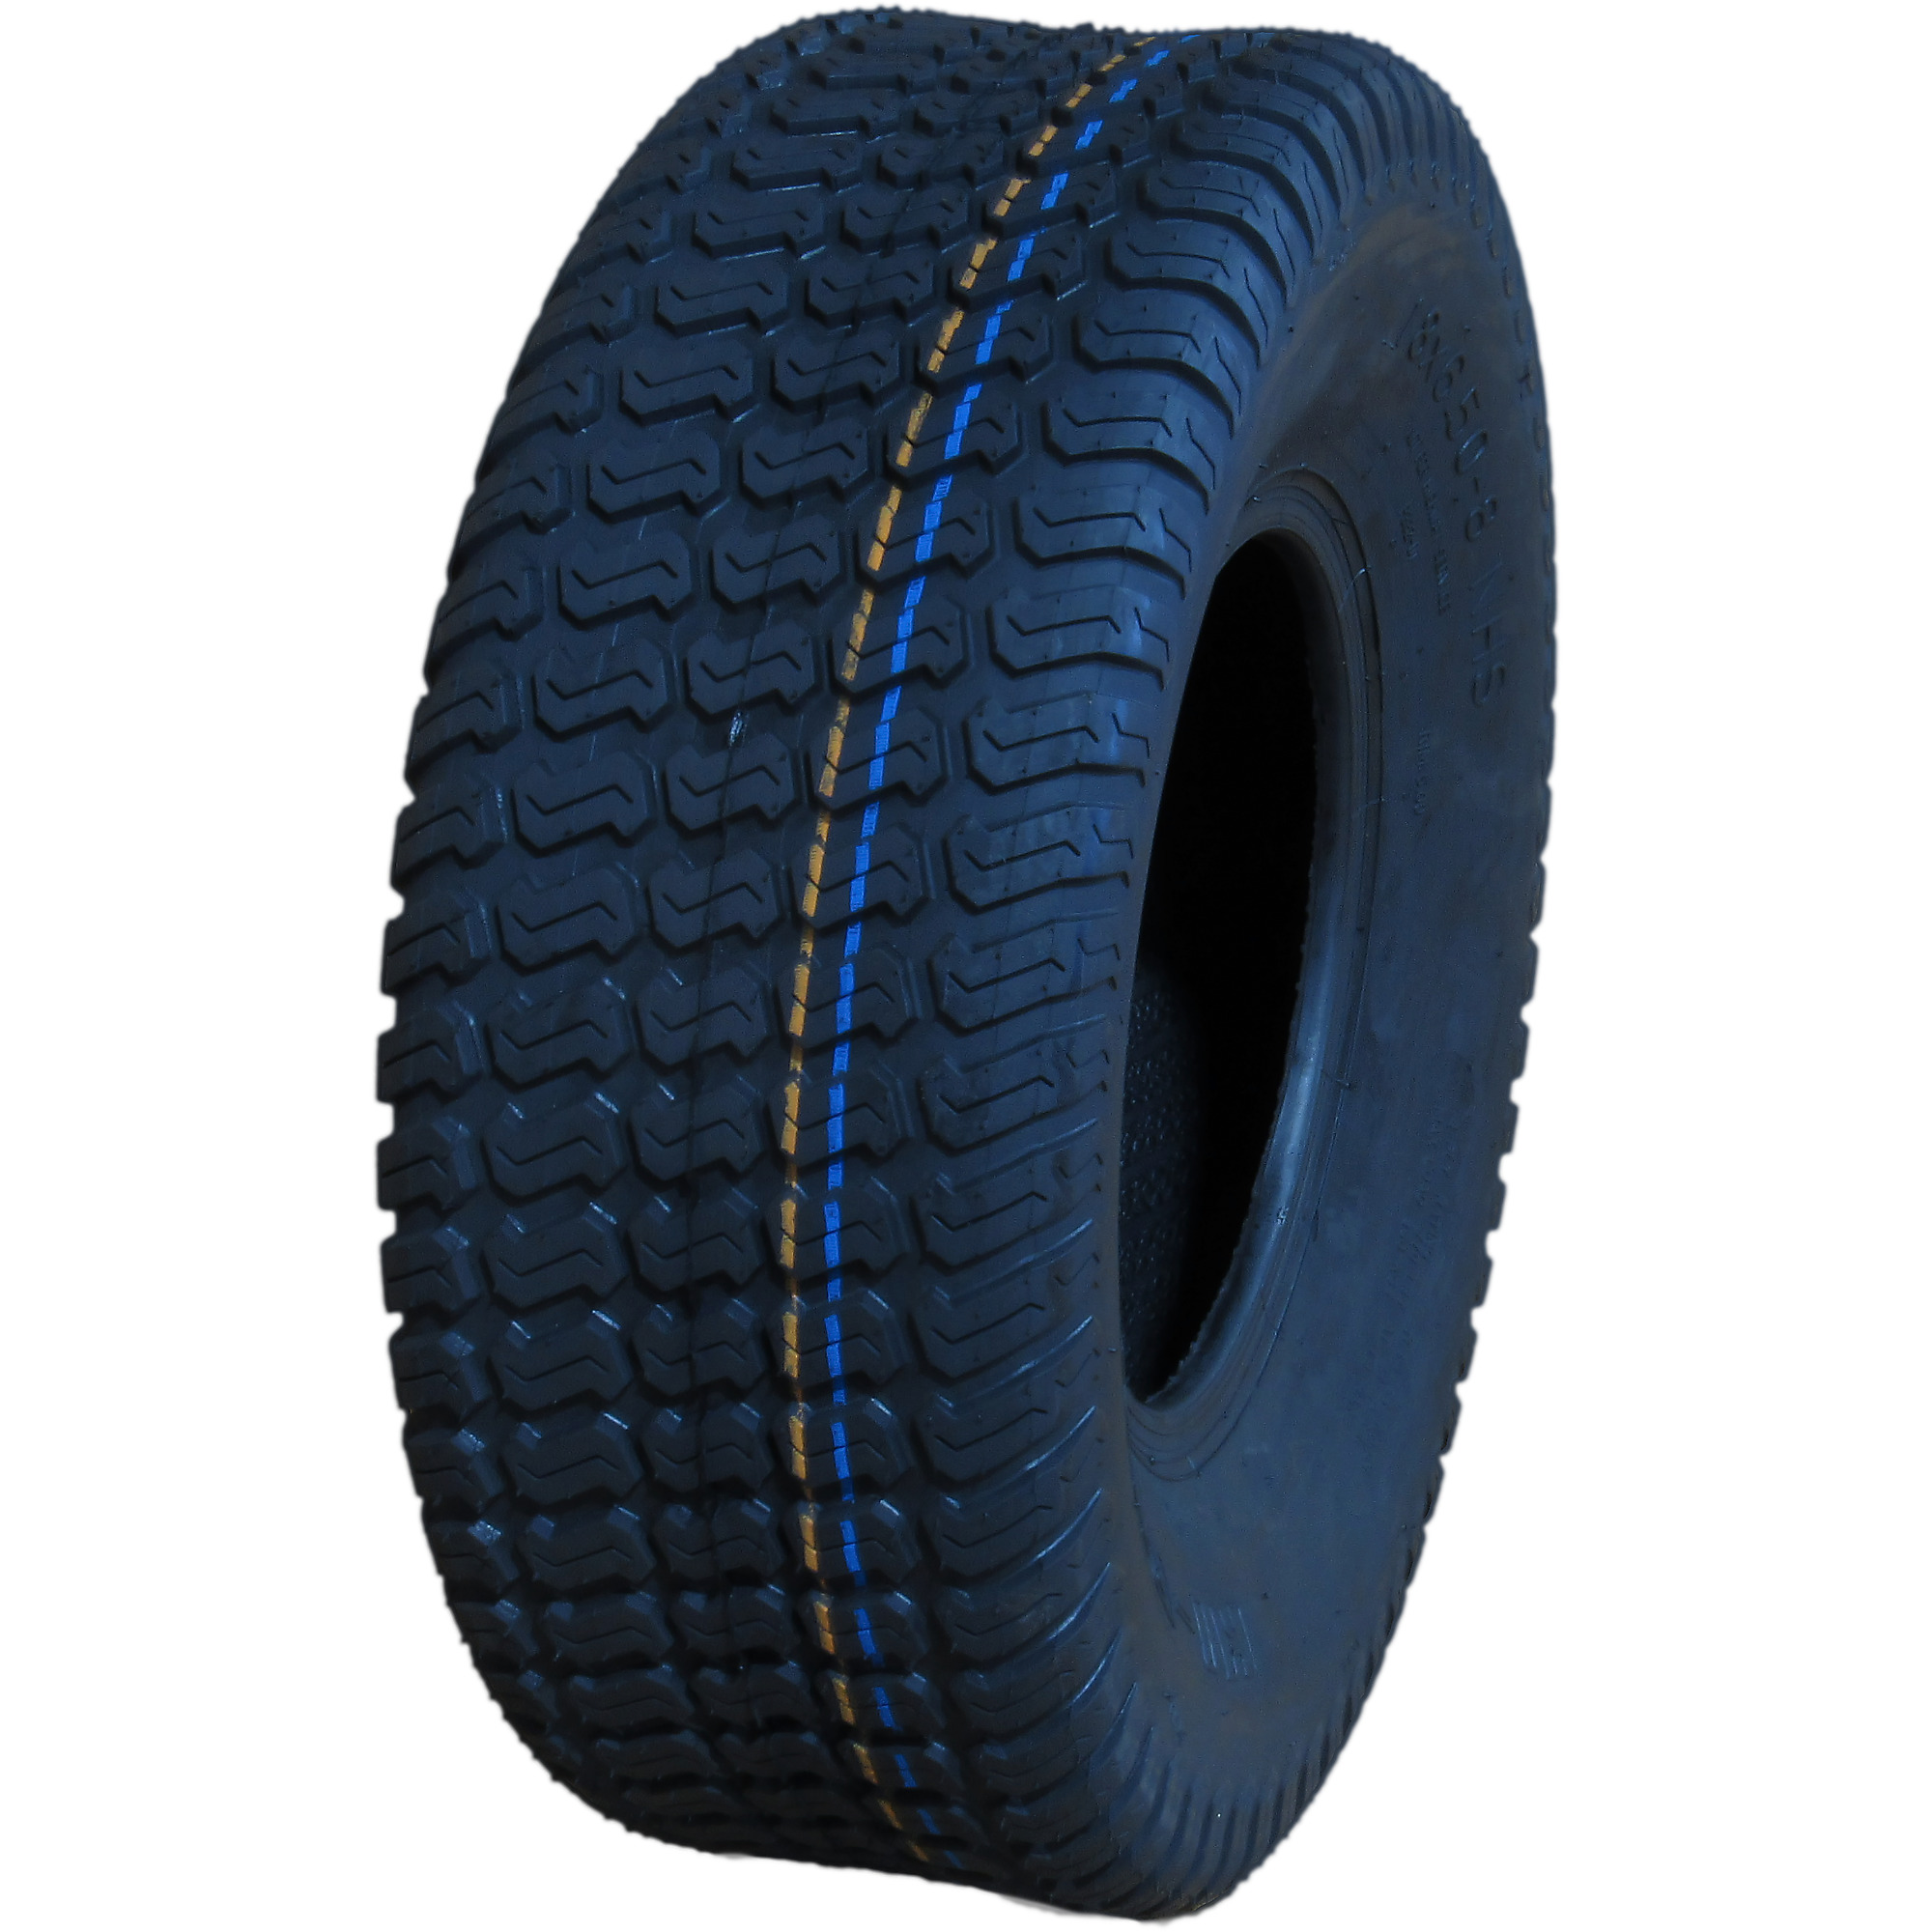 HI-RUN, Lawn Garden Tire, SU05 Turf, Tire Size 18X6.50-8 Load Range Rating B, Model WD1129